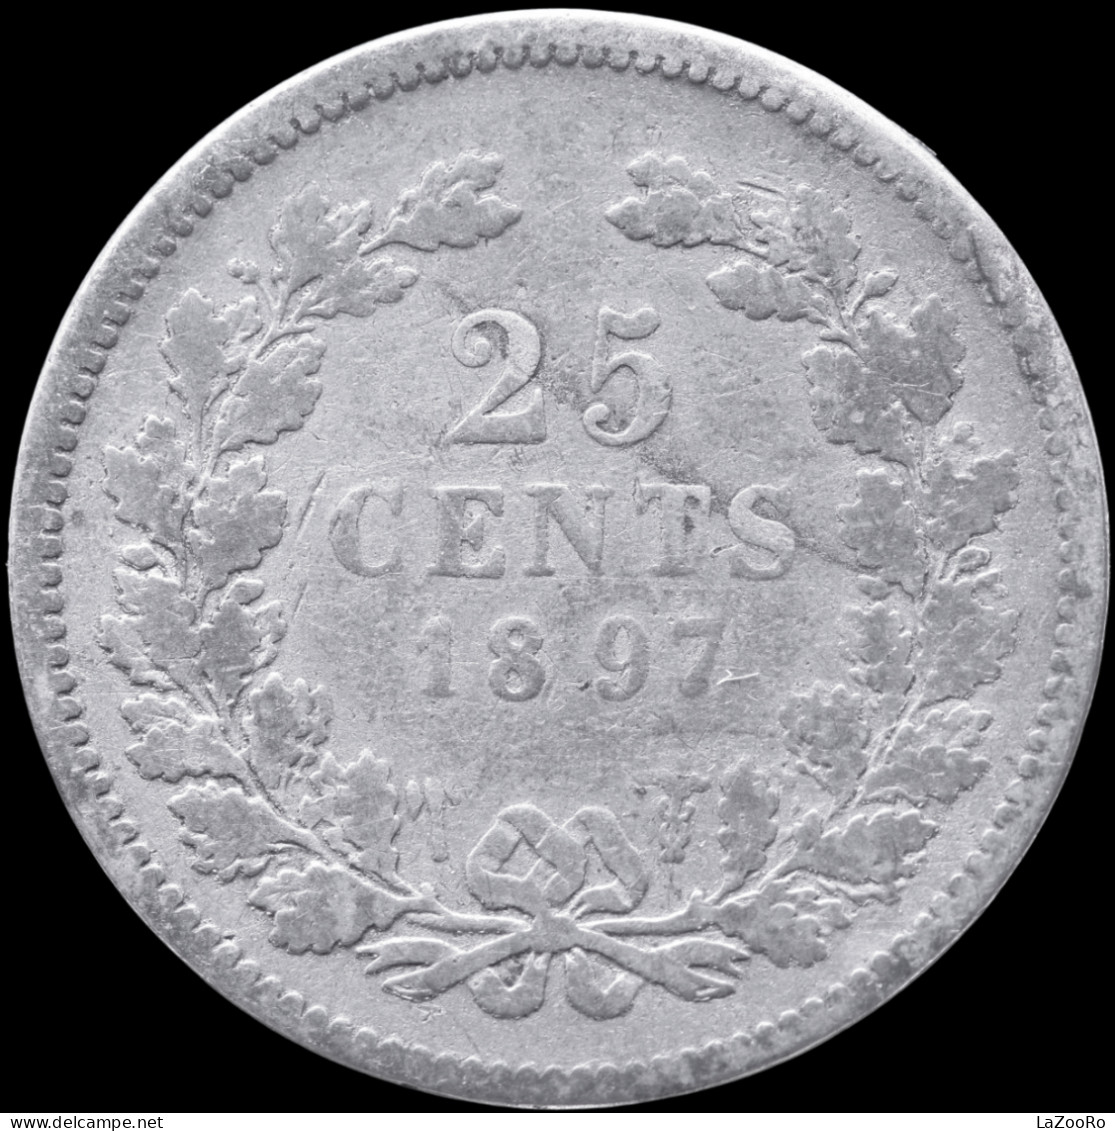 LaZooRo: Netherlands 25 Cents 1897 VF - Silver - 25 Centavos